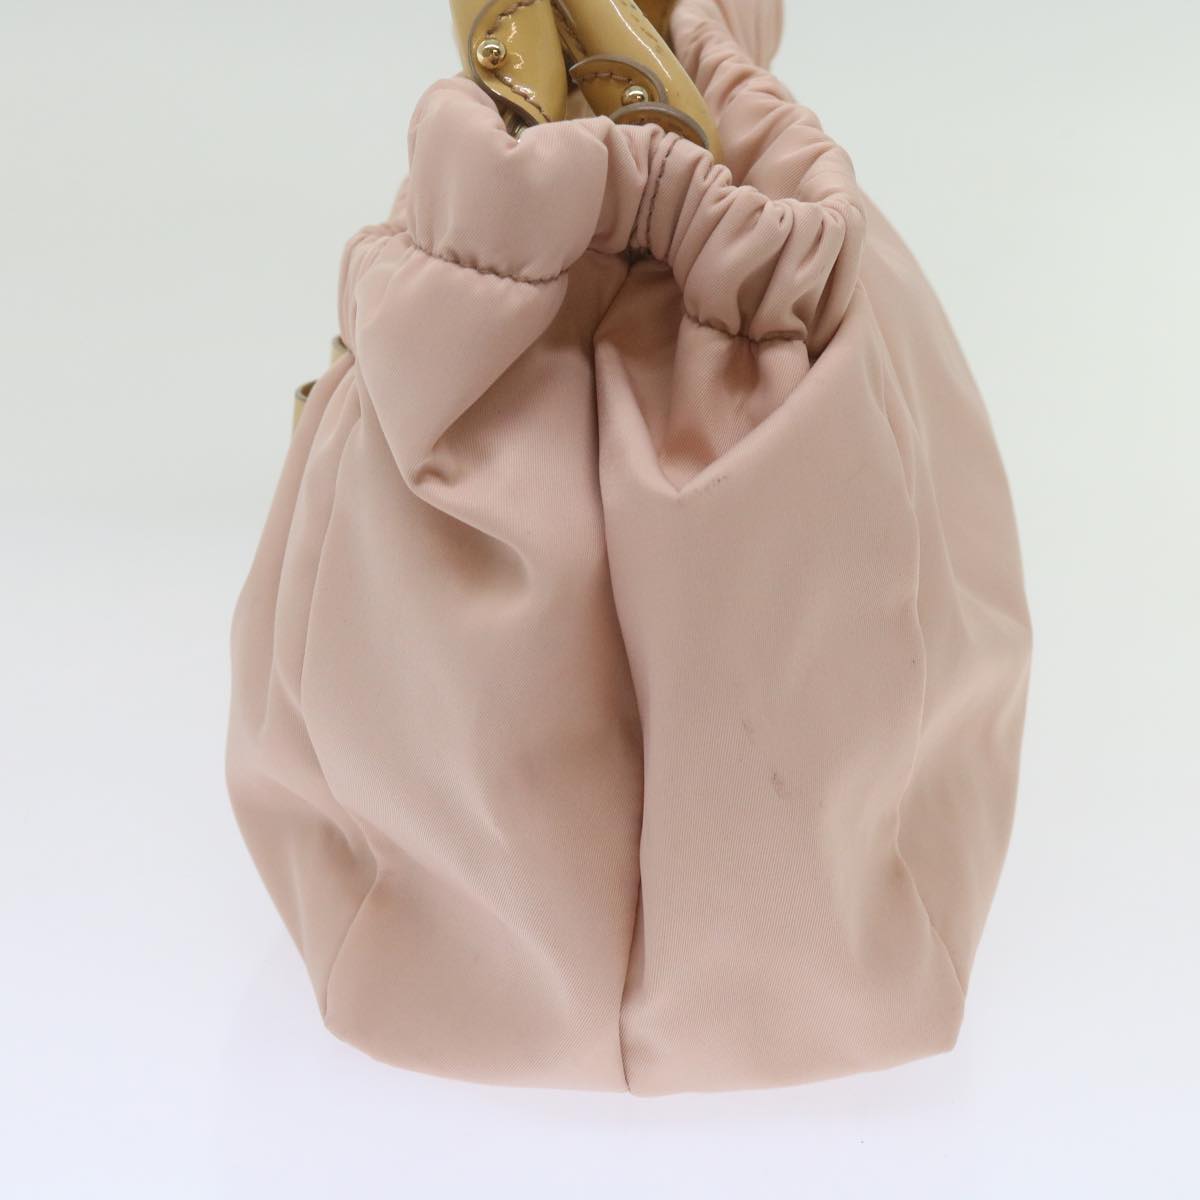 Salvatore Ferragamo Hand Bag Nylon Pink Auth bs12705